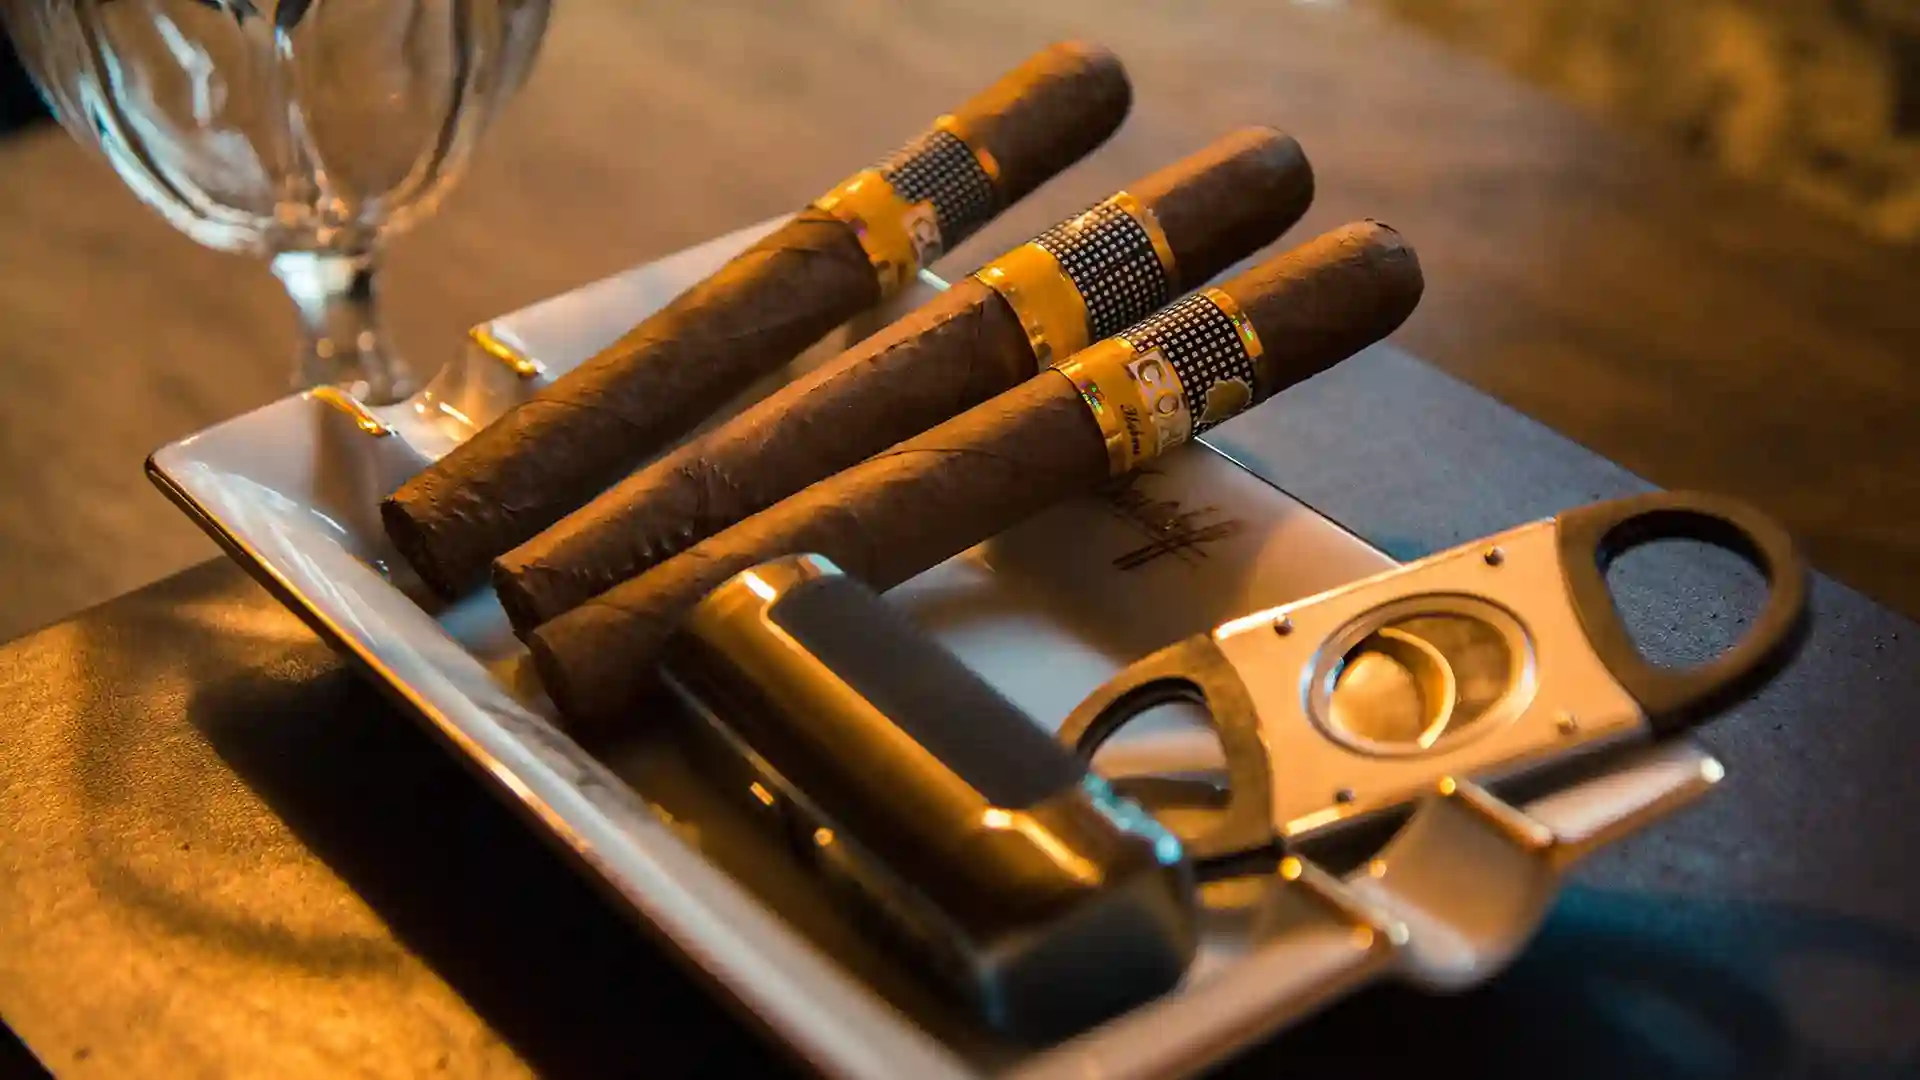 zigarrenzubehör, stilvoll, elegant, edel, hochwertig, zigarrencutter, aschenbecher, anschneiden, anzünden, zigarrengenuss, xikar, zigarren accessoires online kaufen